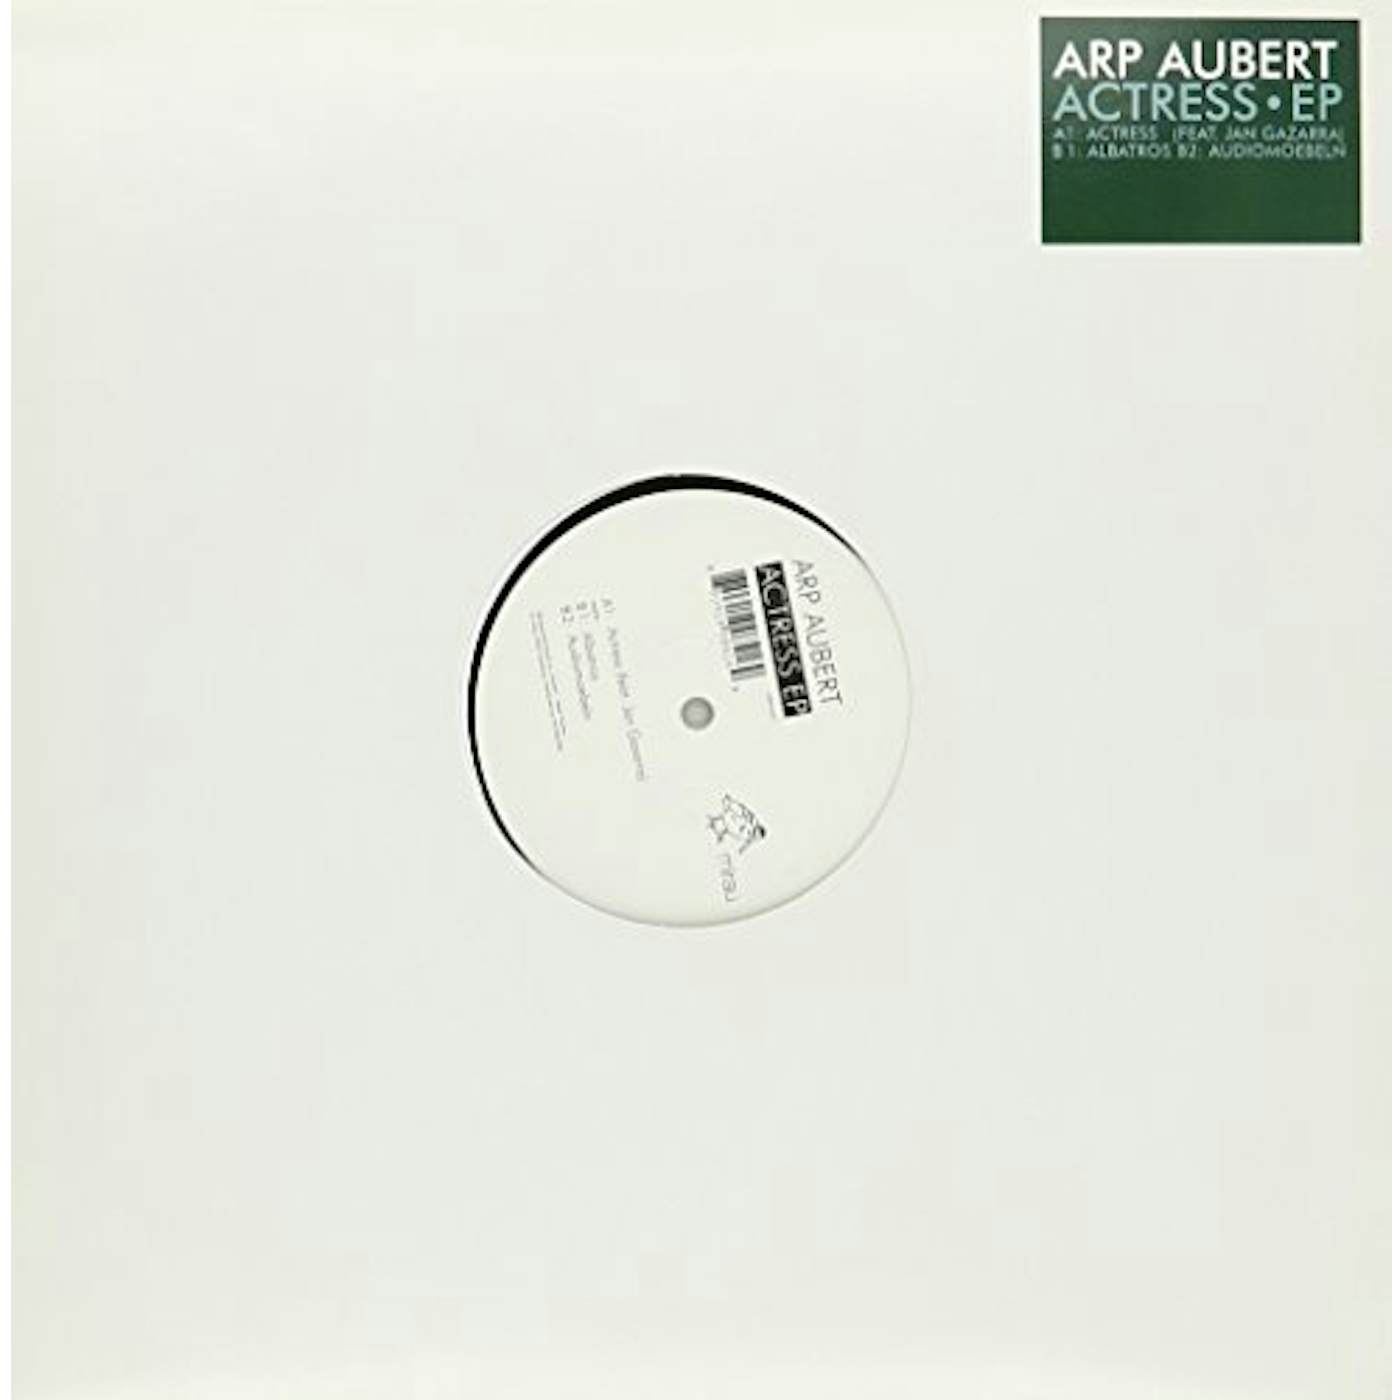 Arp Aubert ACTRESS Vinyl Record